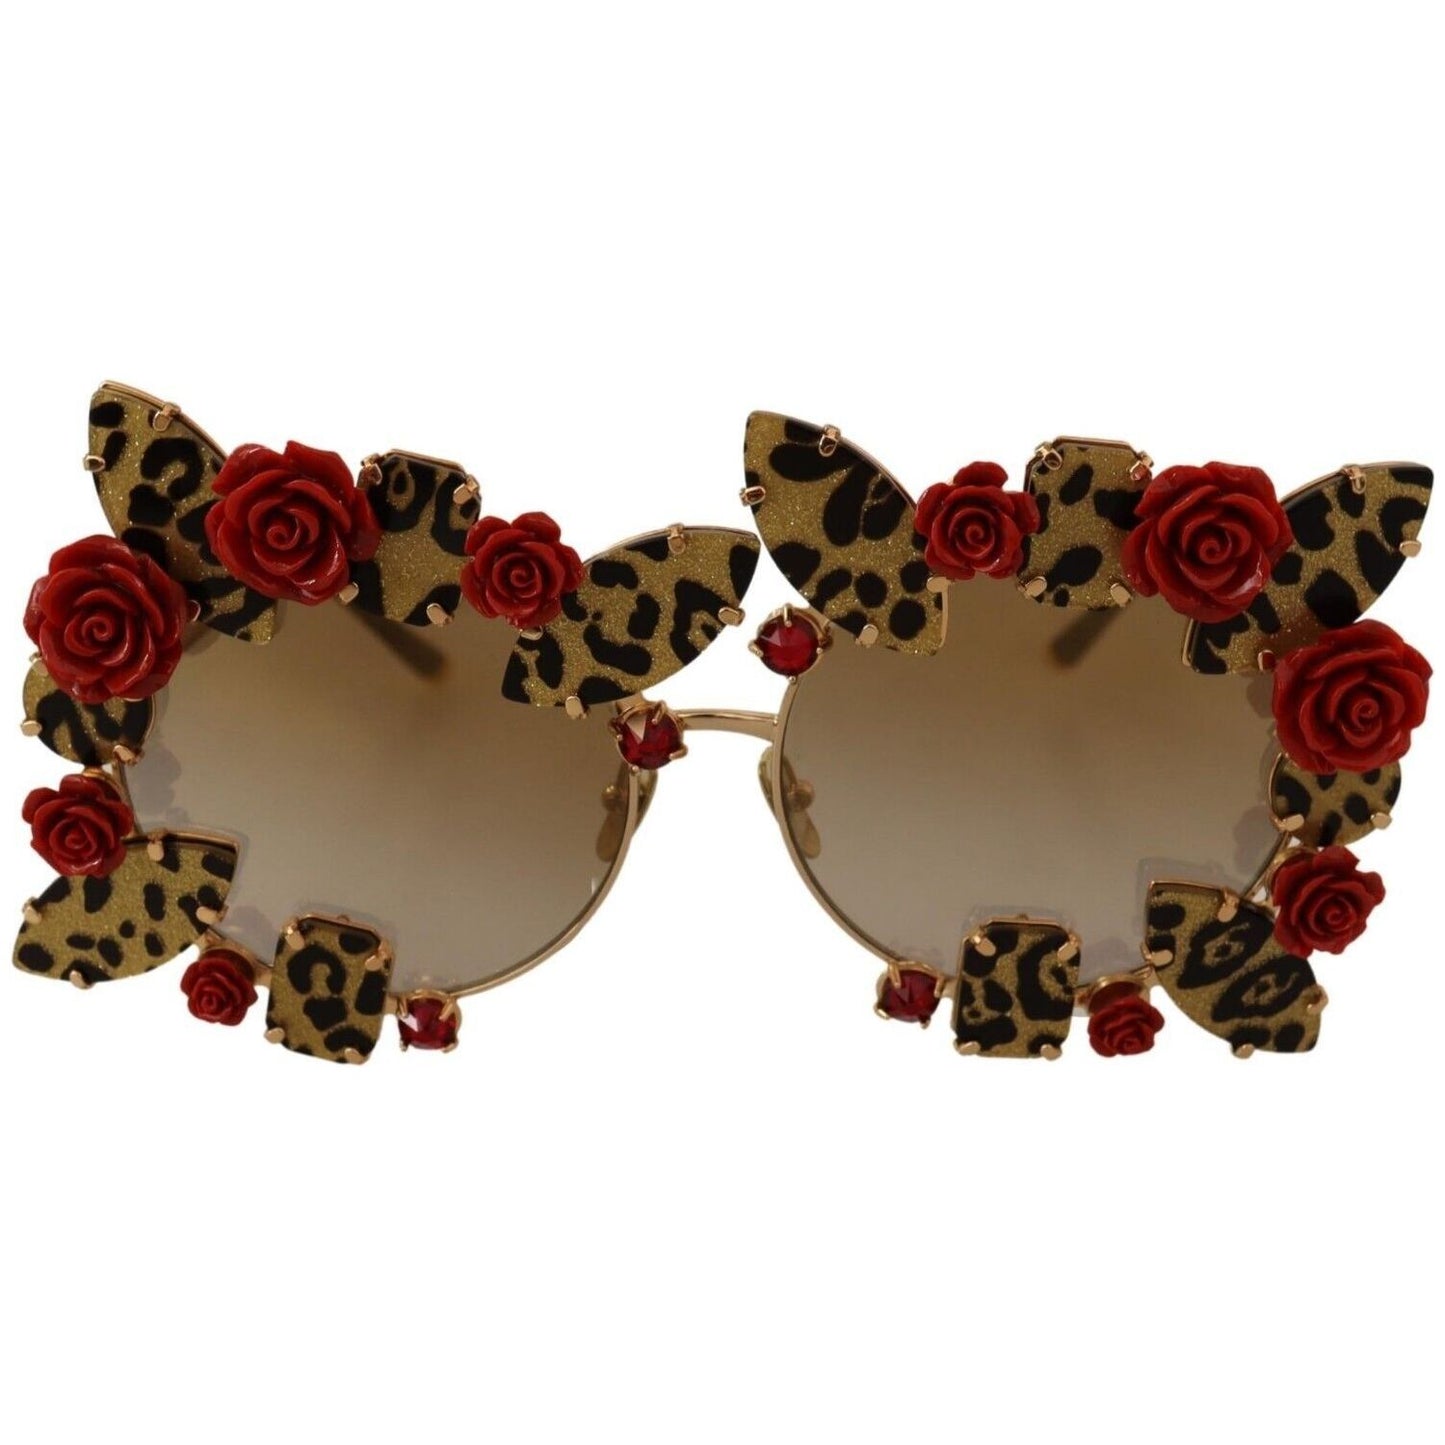 Dolce & Gabbana Elegant Round Metal Sunglasses with Rose Detail WOMAN SUNGLASSES gold-metal-frame-roses-embellished-sunglasses